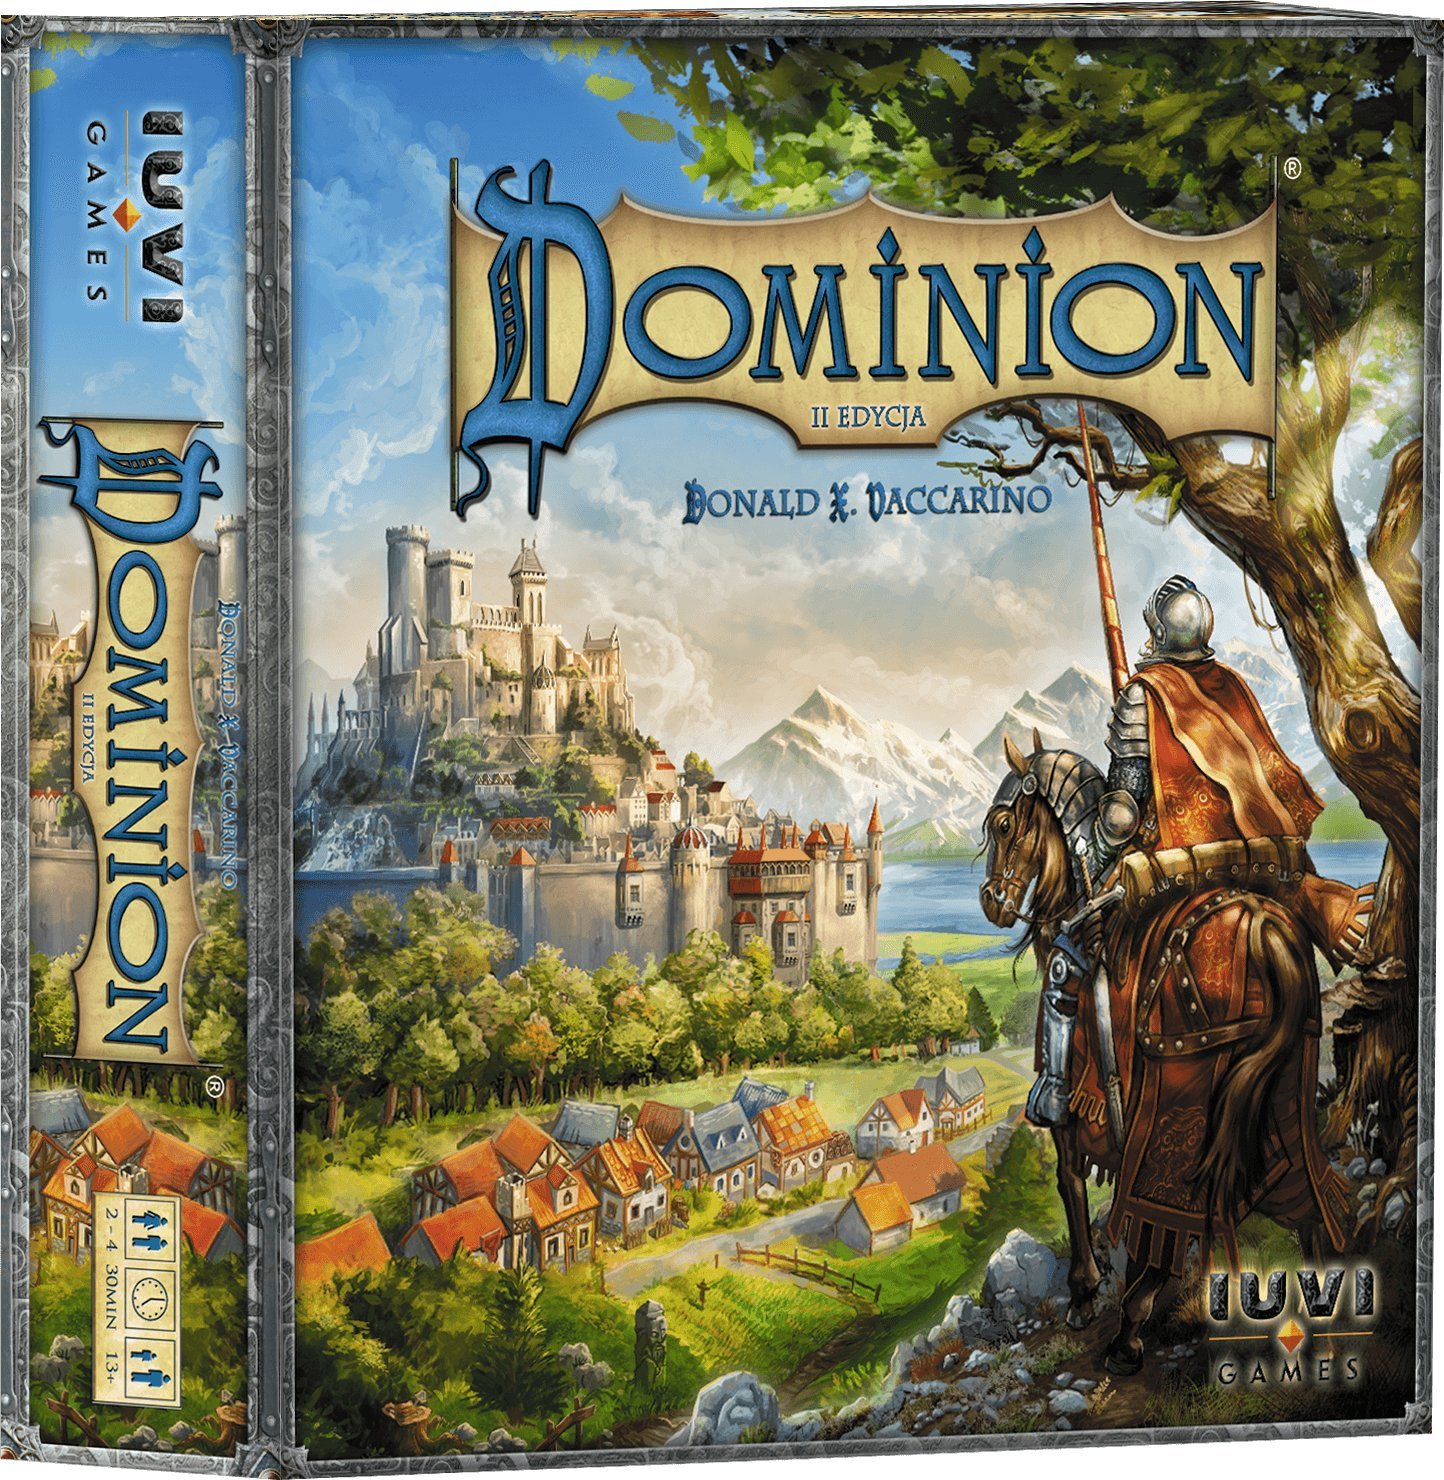 Iuvi Dominion (II edycja)